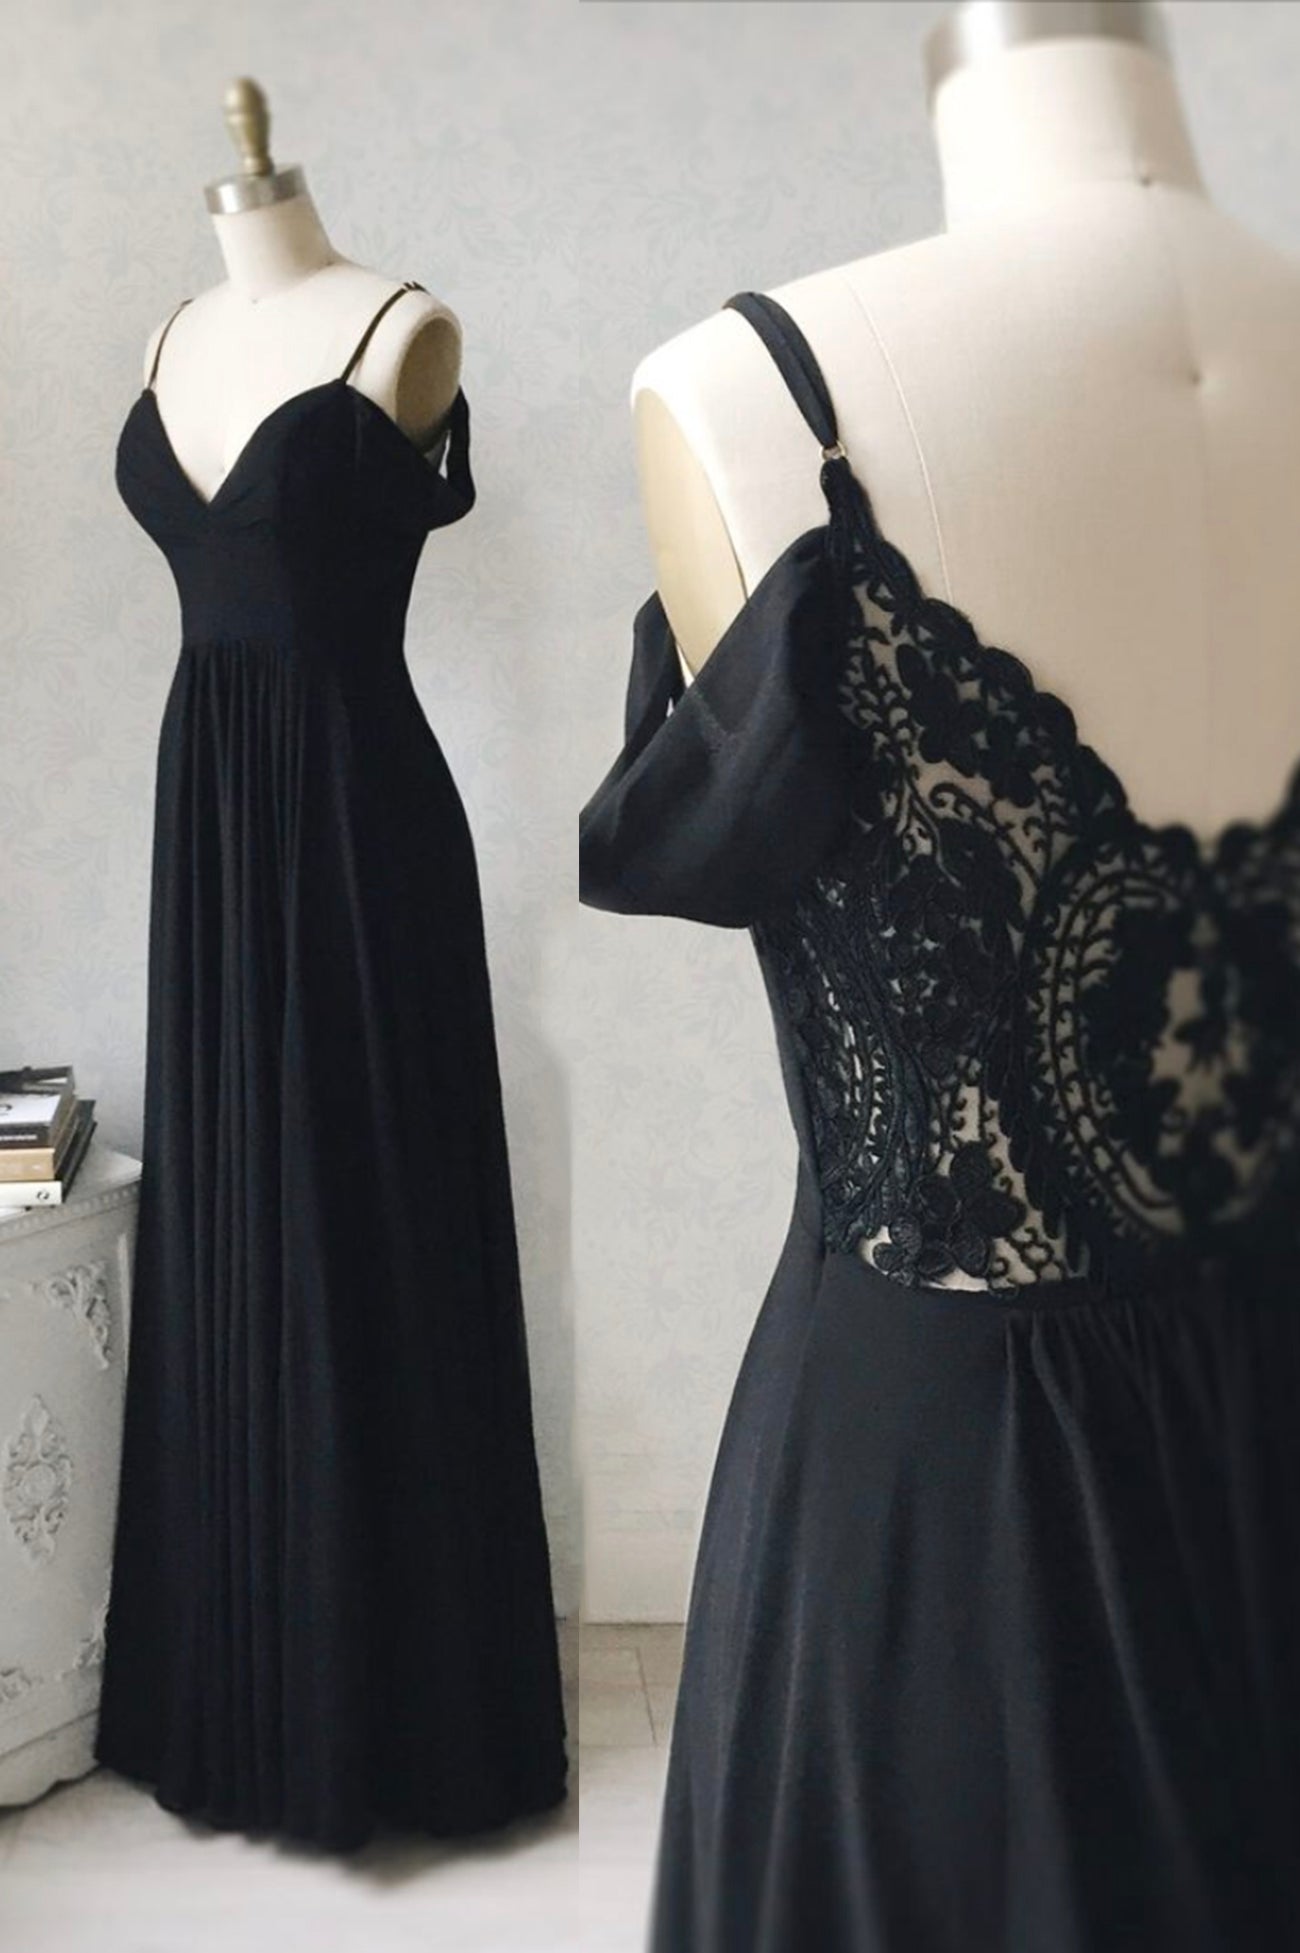 Prom Dress Gowns, Black Chiffon Lace Long Prom Dresses, A-Line Evening Dresses